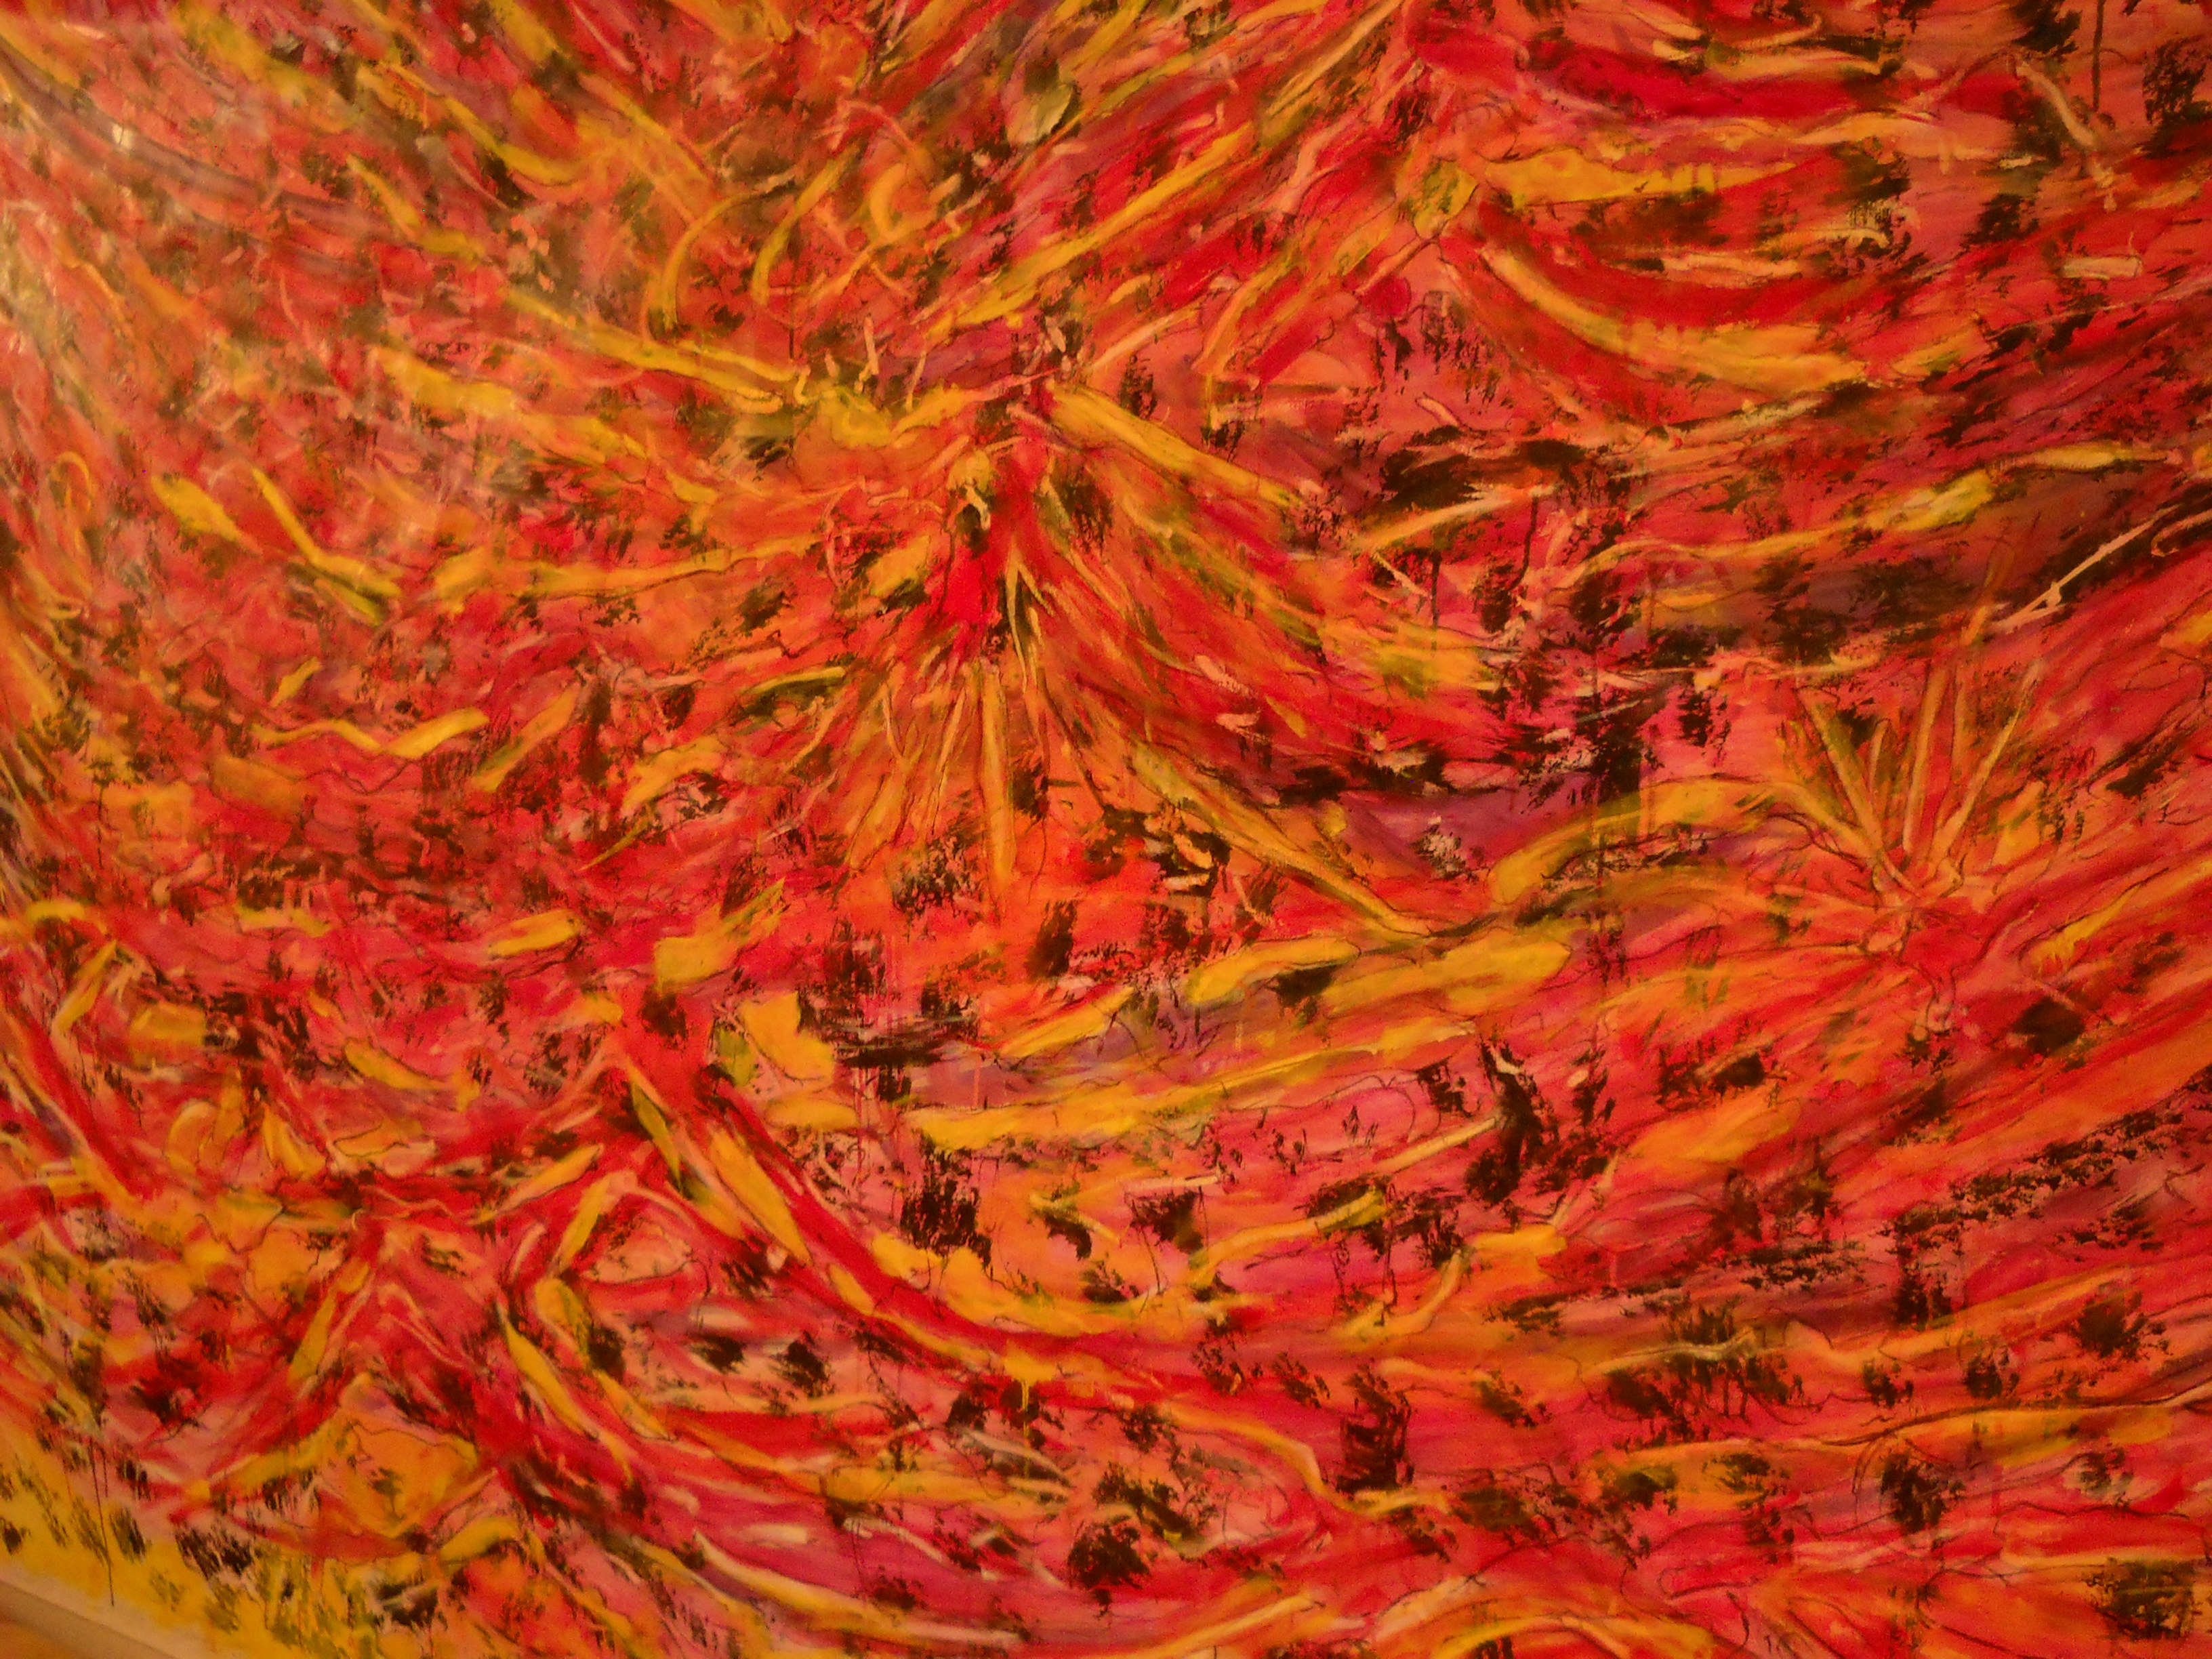 Uri Dowbenko, The Big O, Oil on Canvas, 60 x 105, 2009